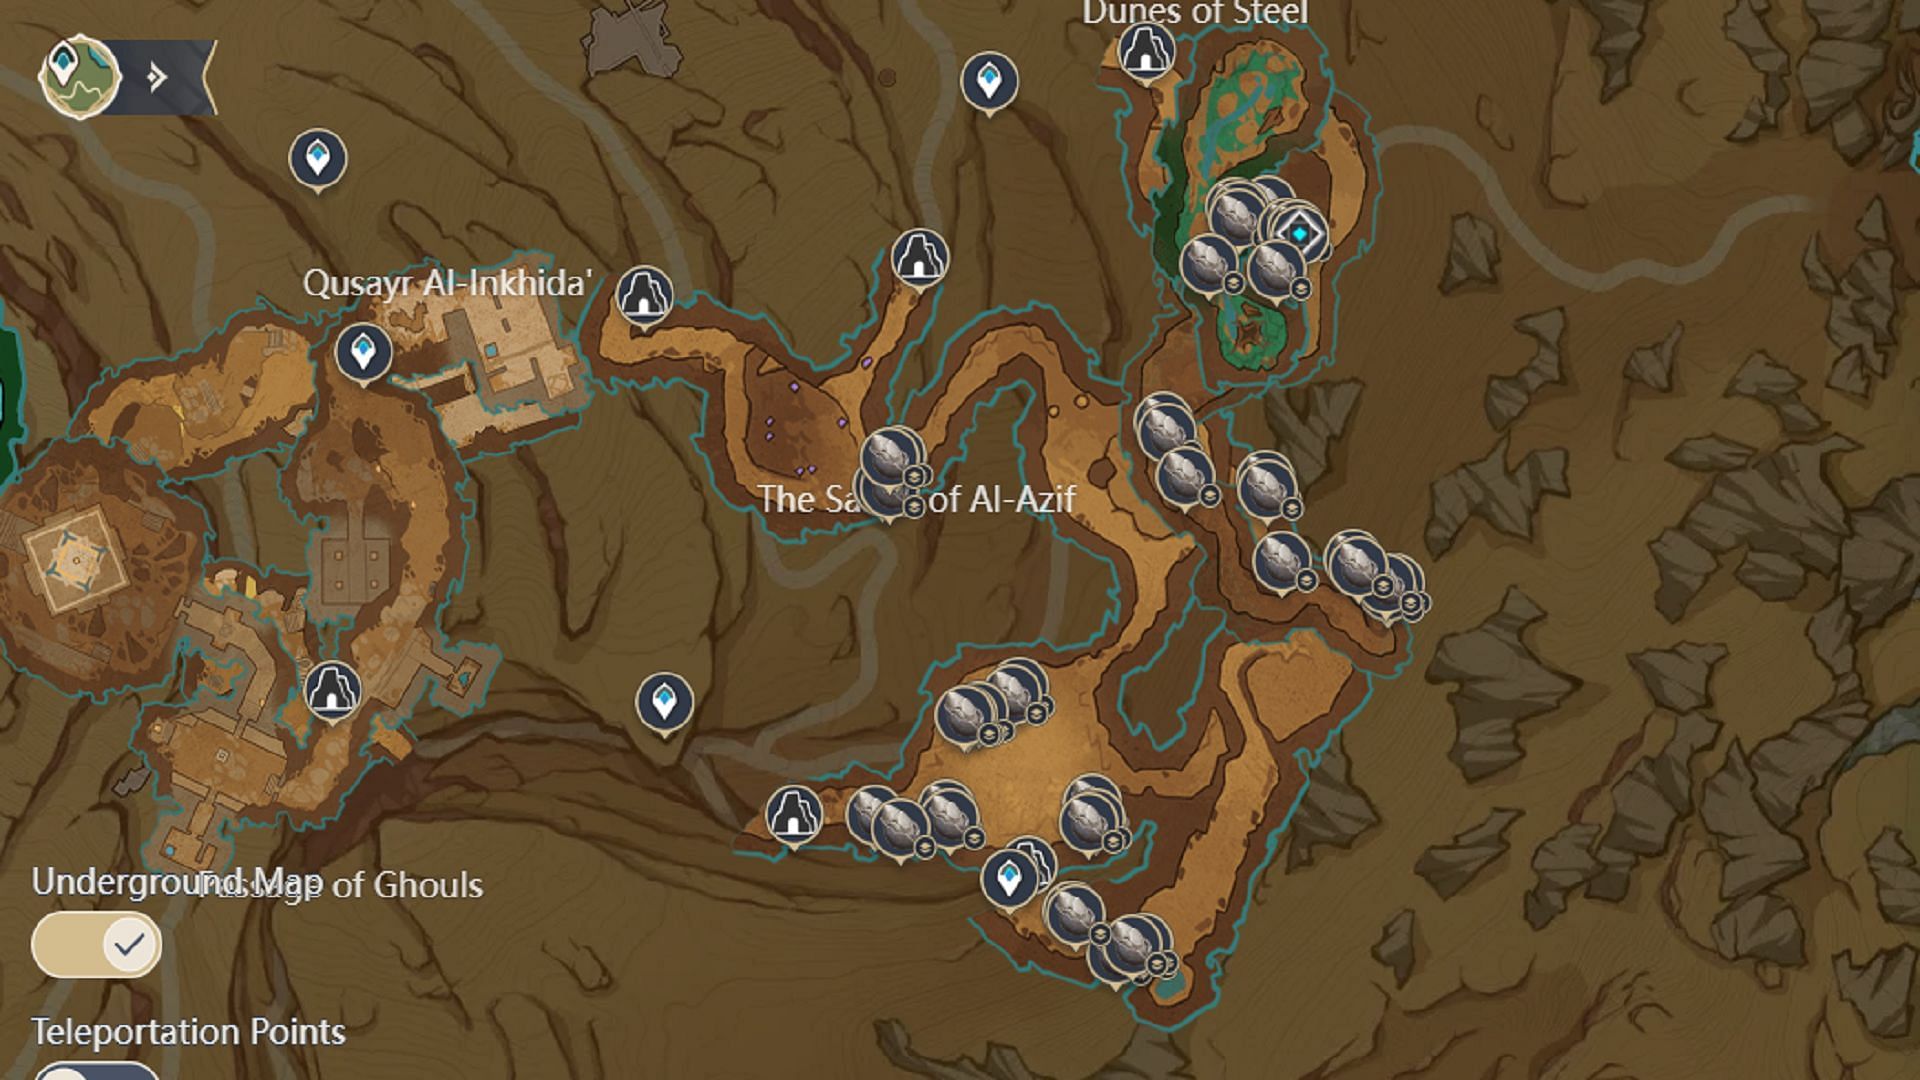 Desert of Hadramaveth underground map - Wenut Tunnets (Image via HoYoverse)